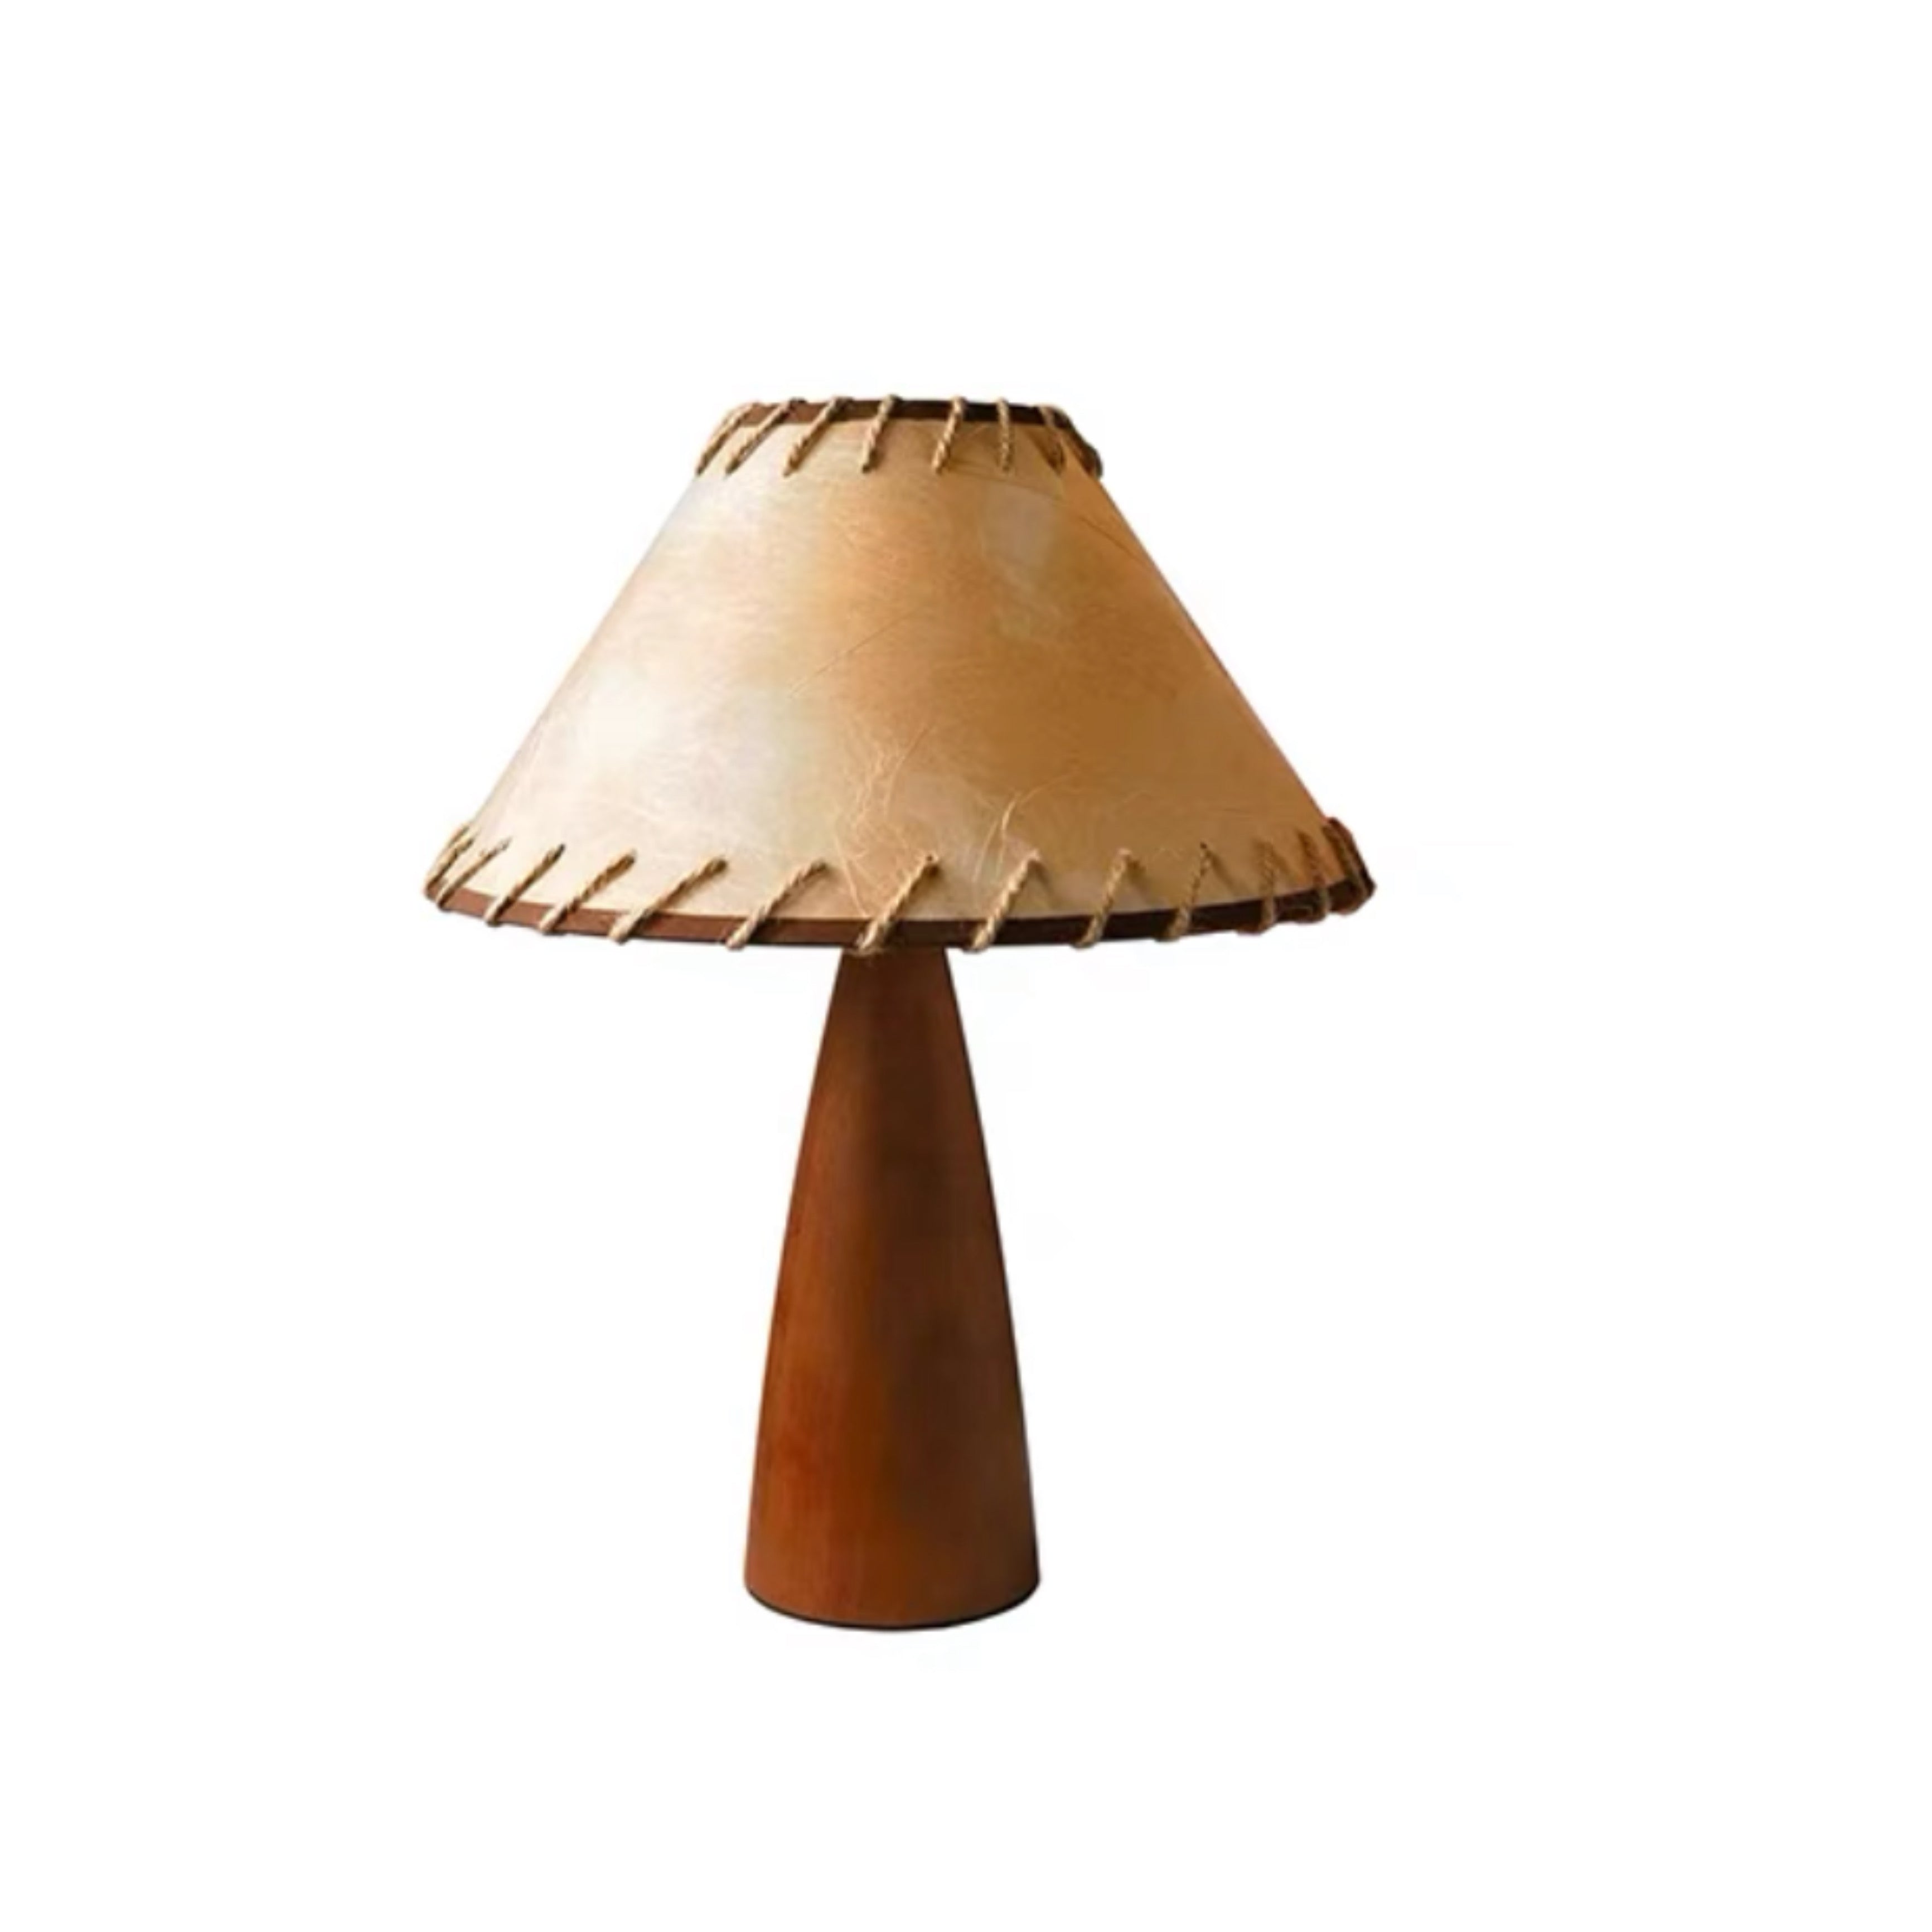 R48 natural casquette lamp